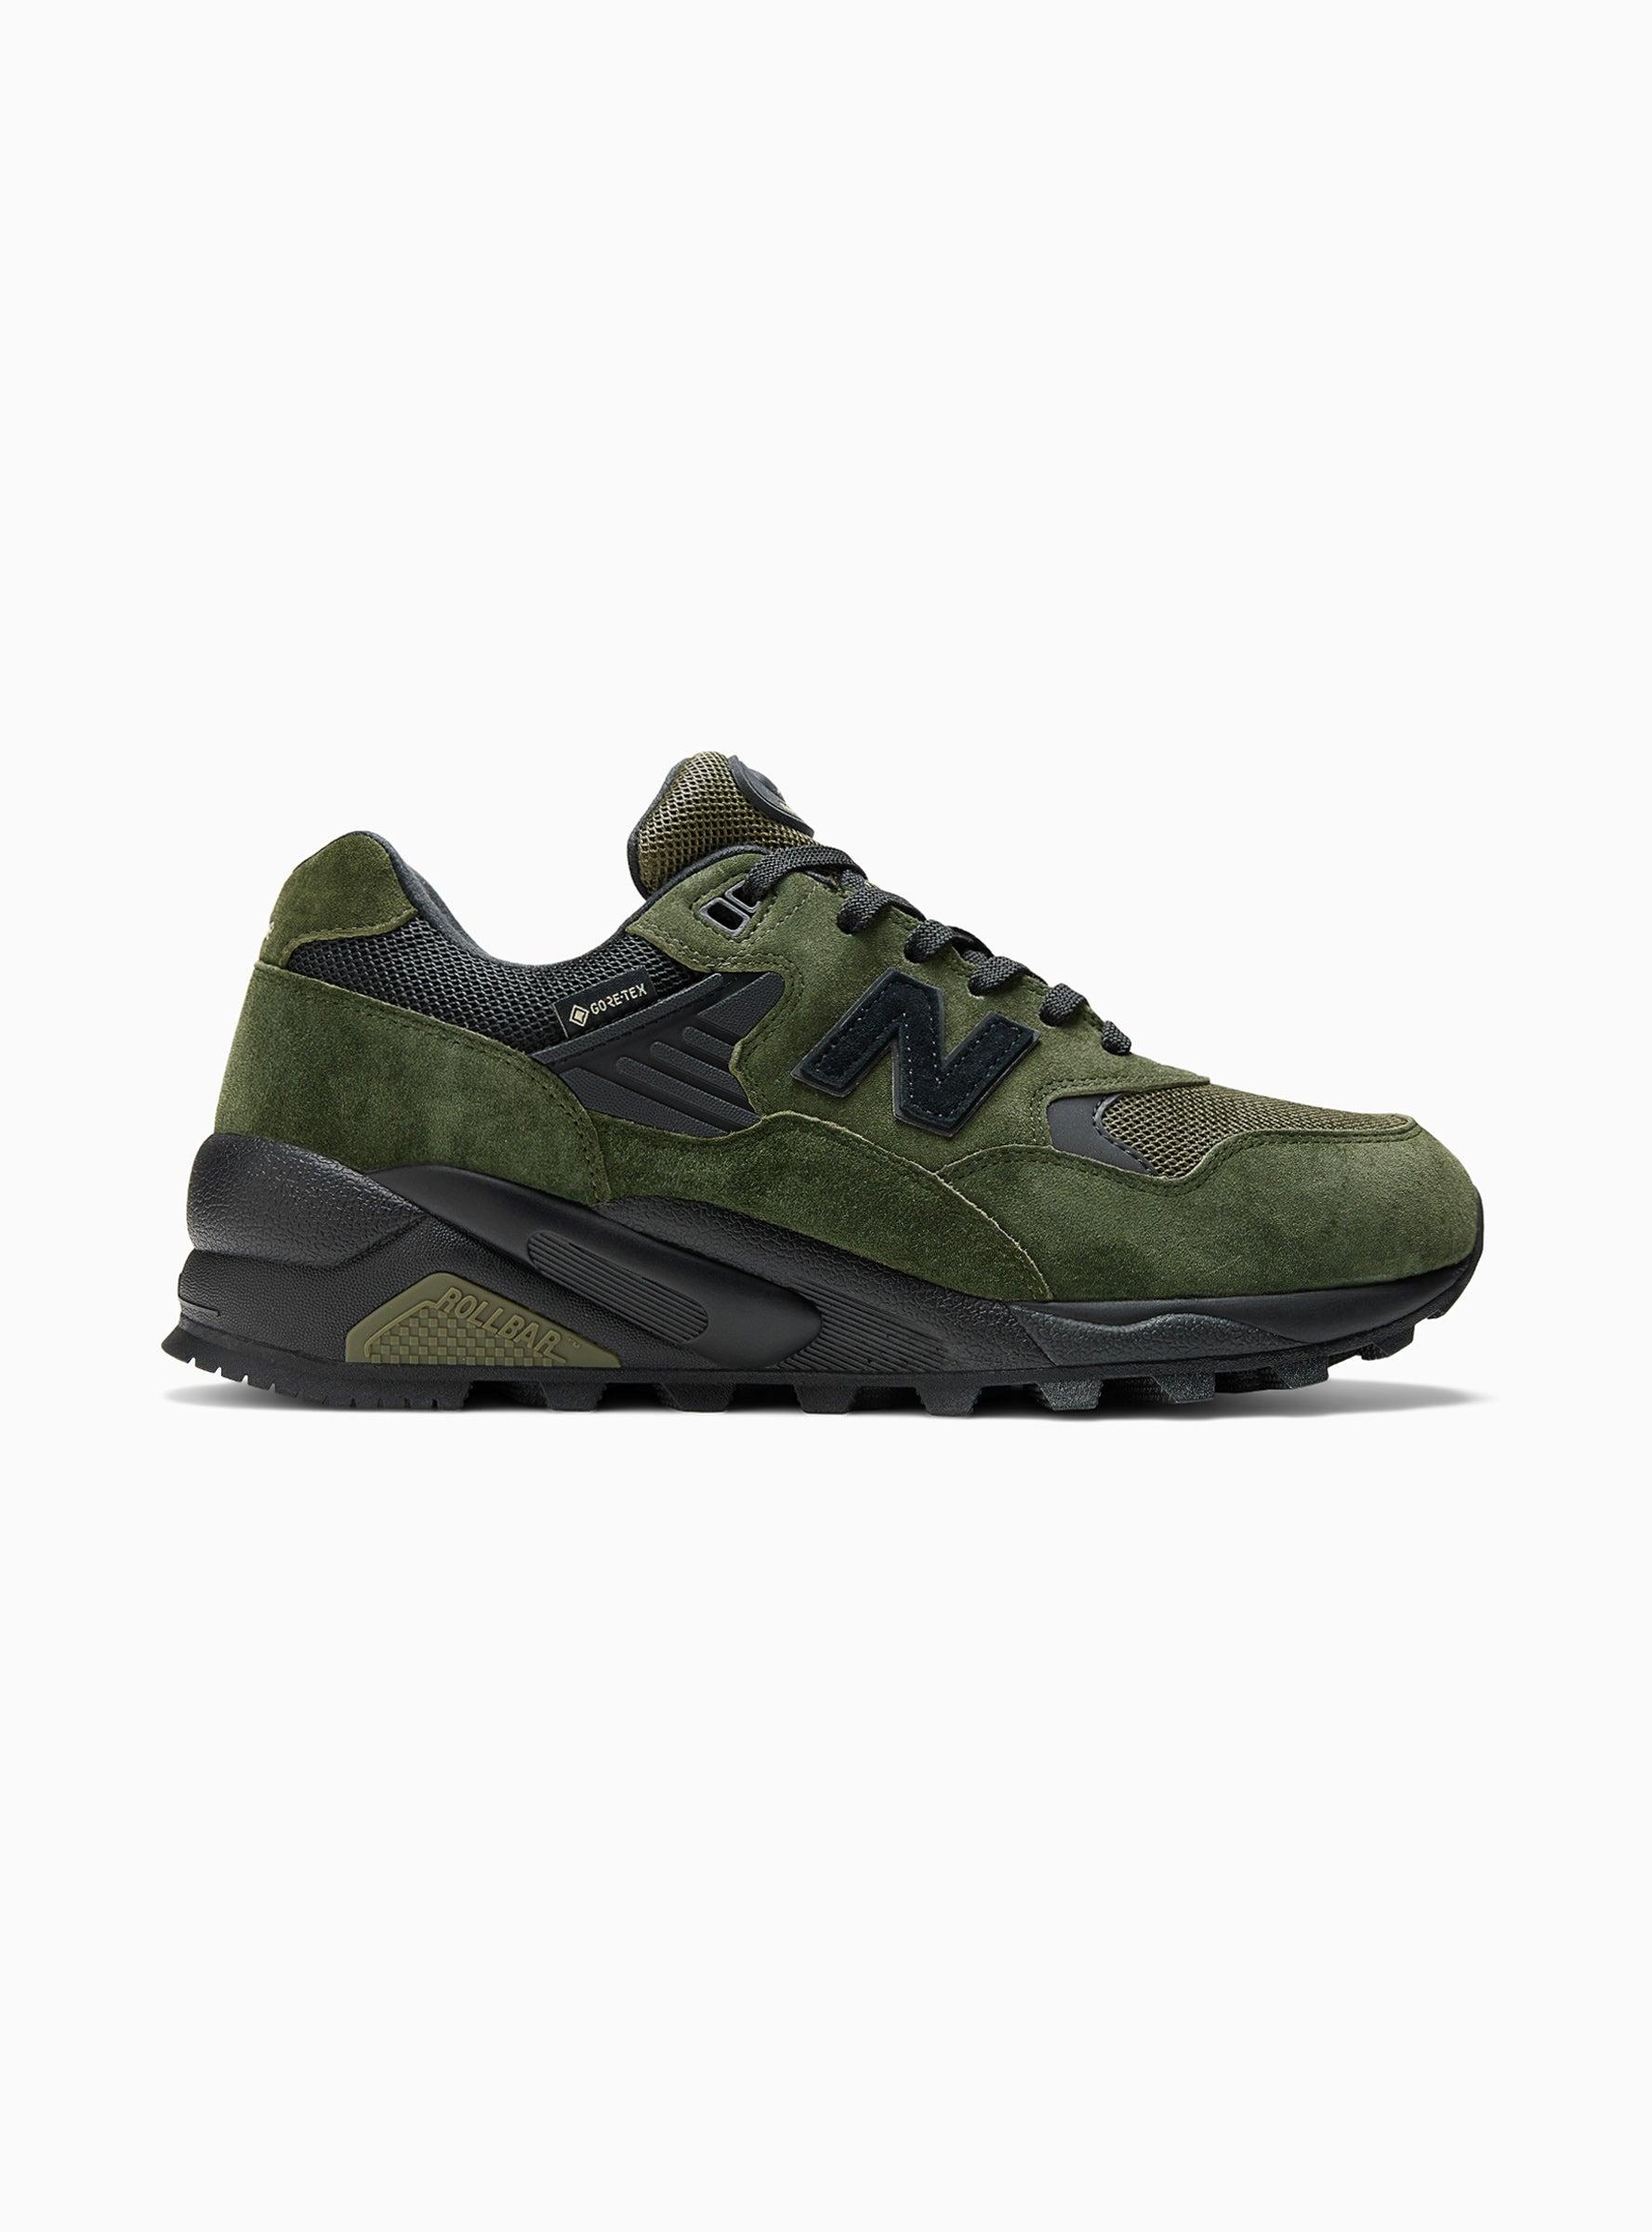 New Balance Mt580rbl Gtx Sneakers Kombu & Black in Green for Men | Lyst